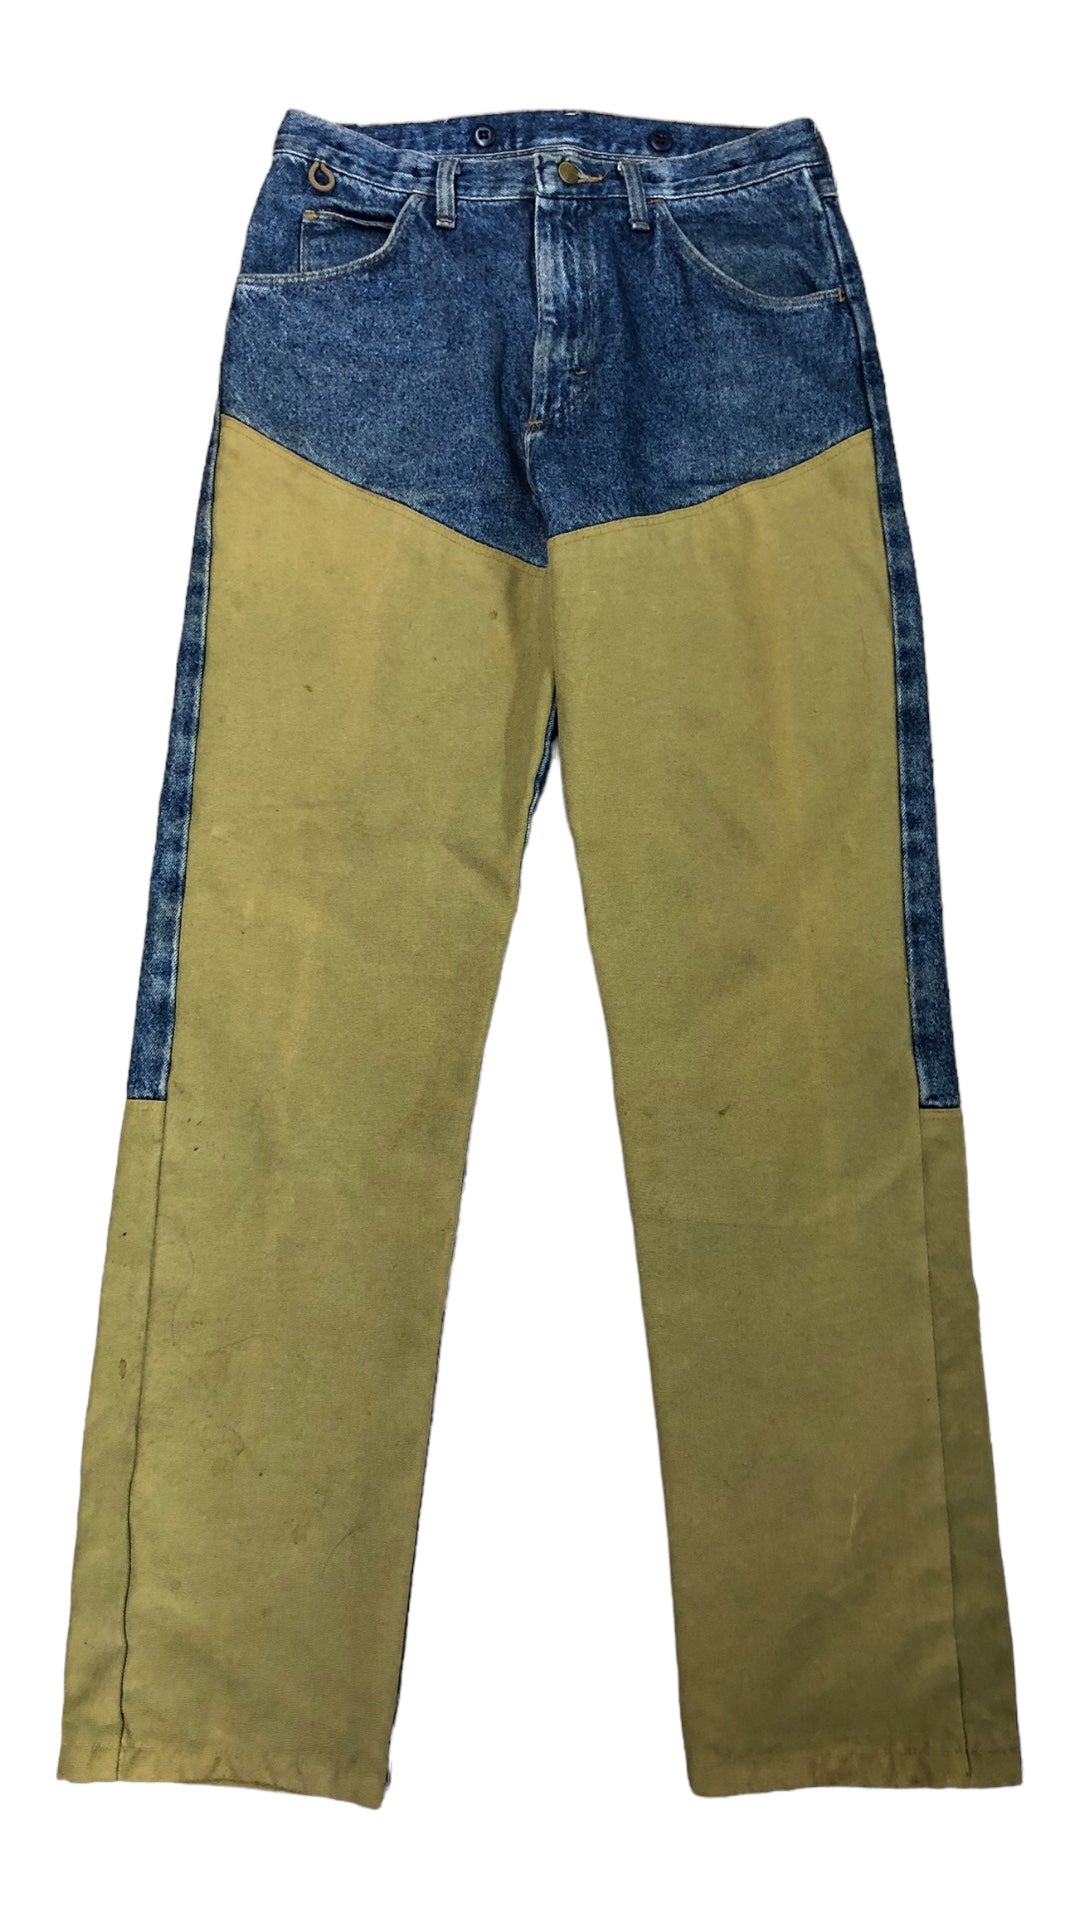 VTG Wrangler Rugged Wear Khaki/Denim Pants Sz 32x34